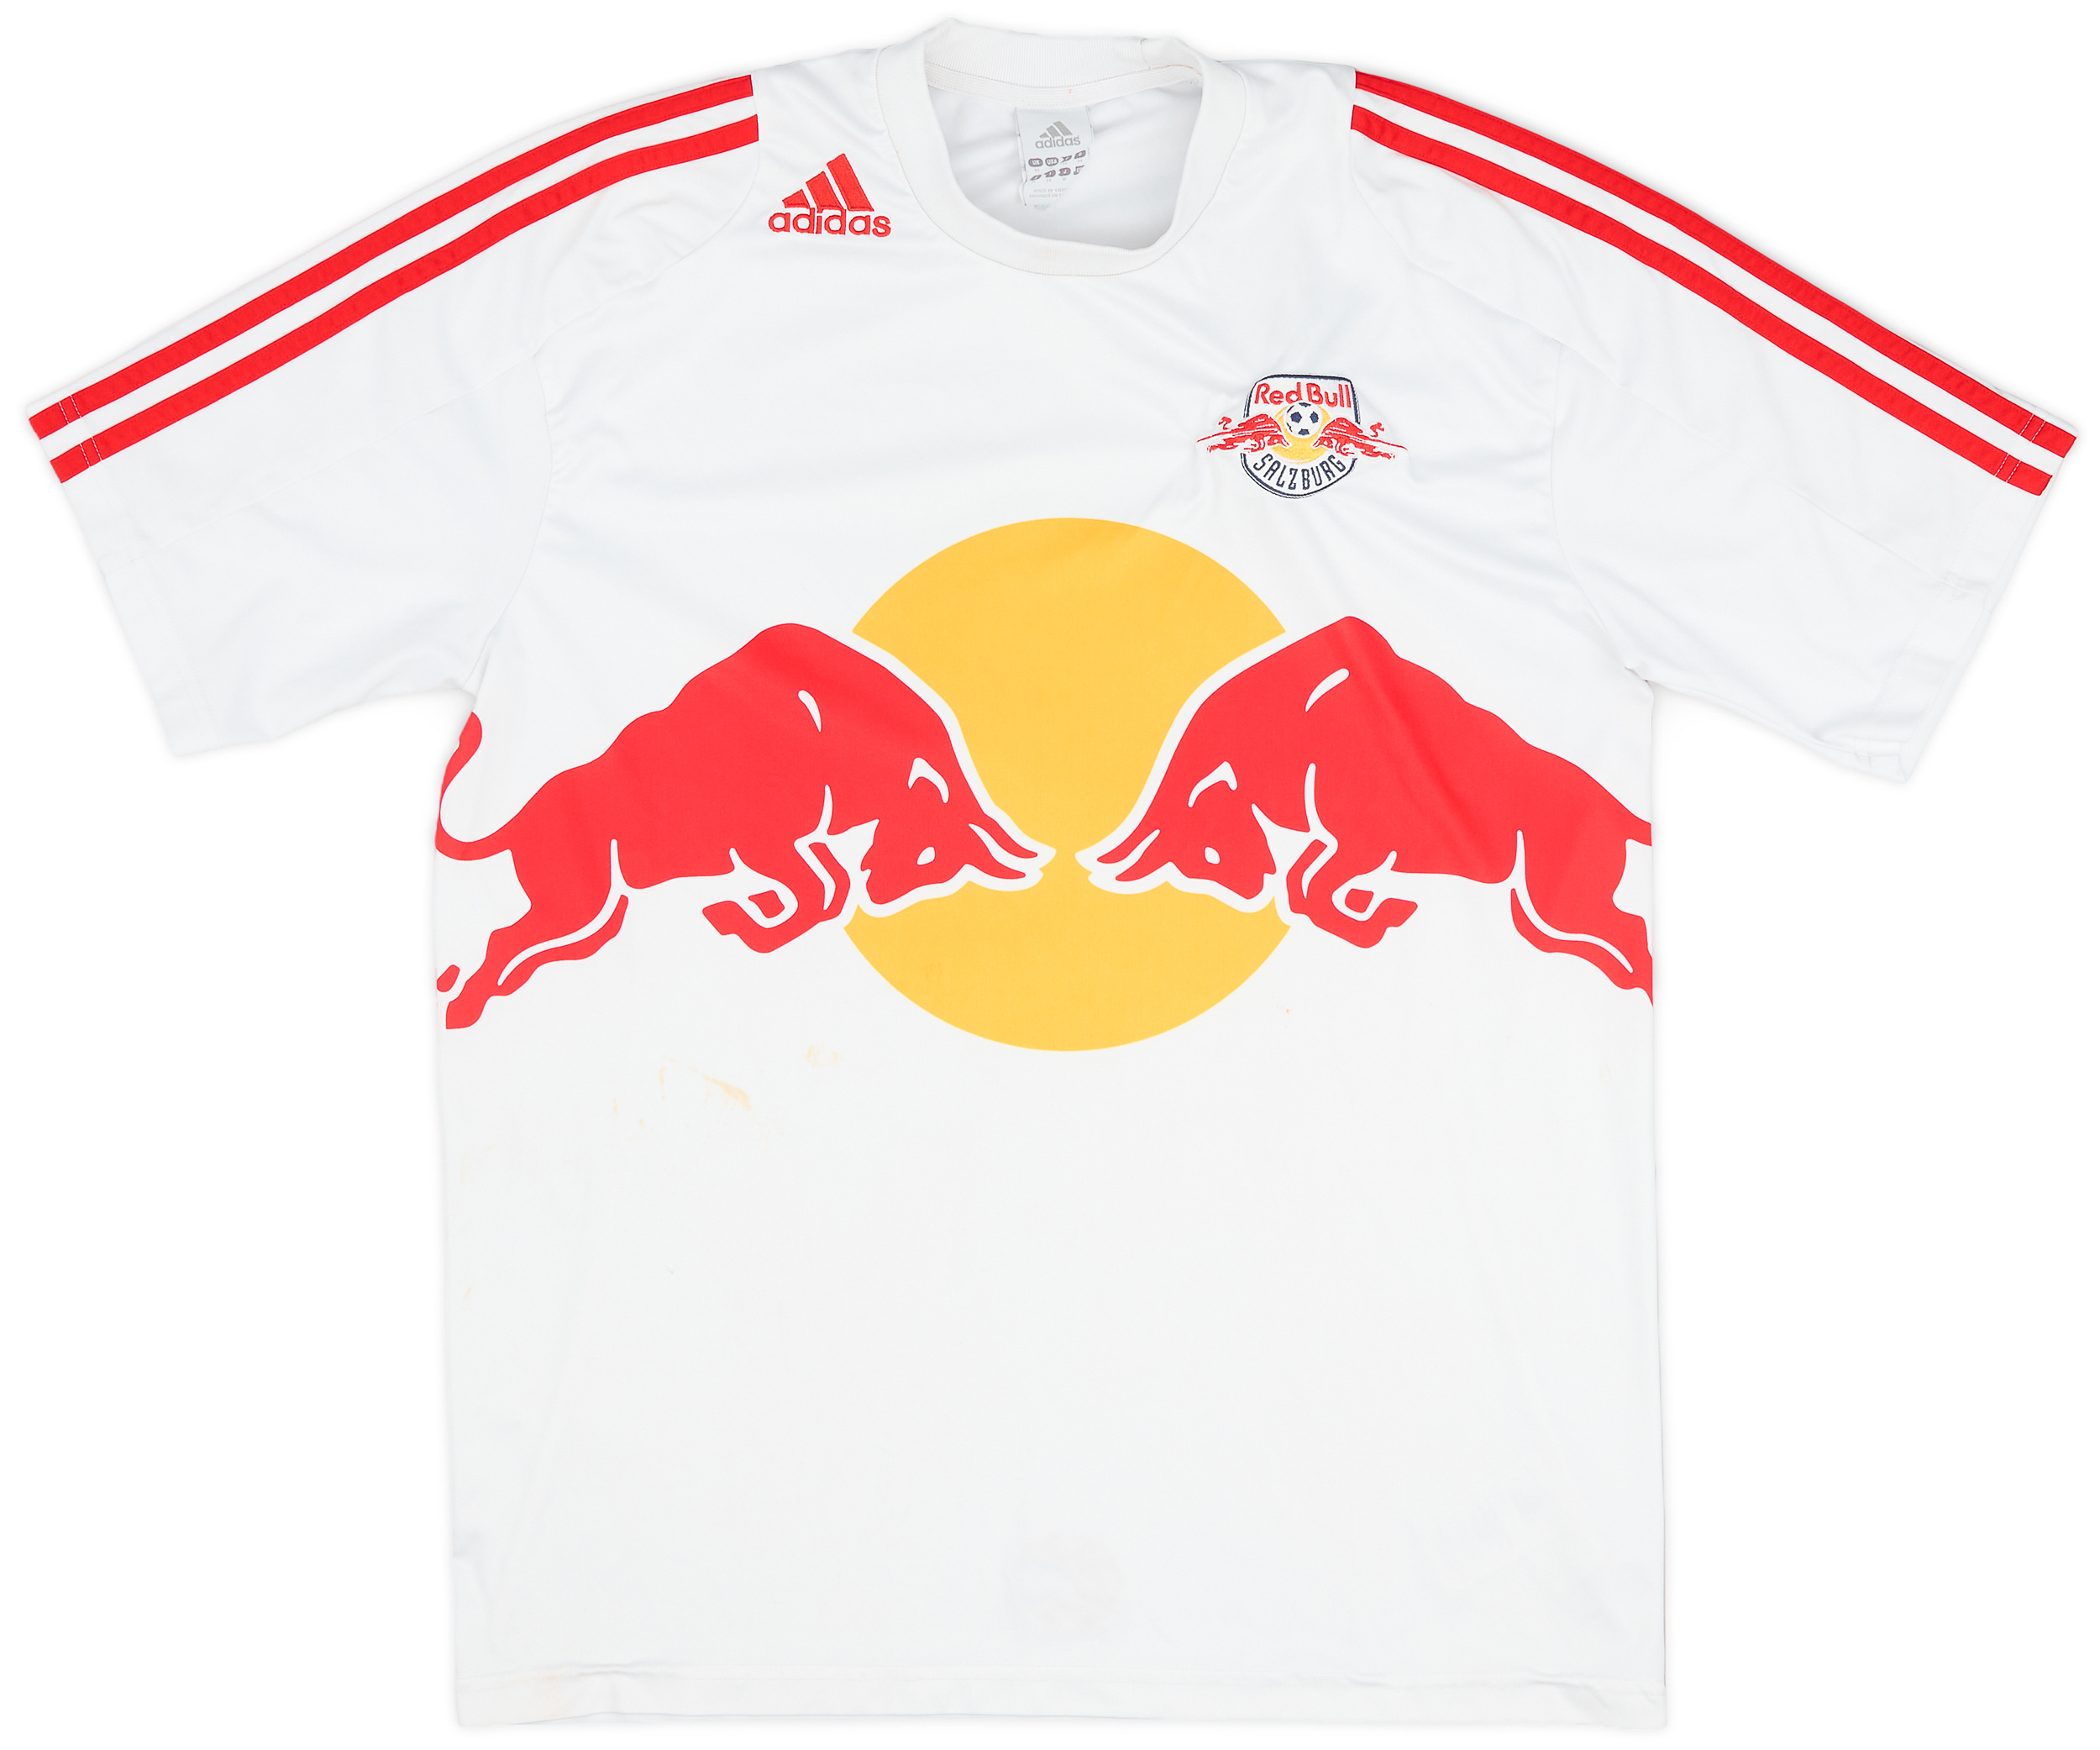 Red Bull Salzburg  home футболка (Original)